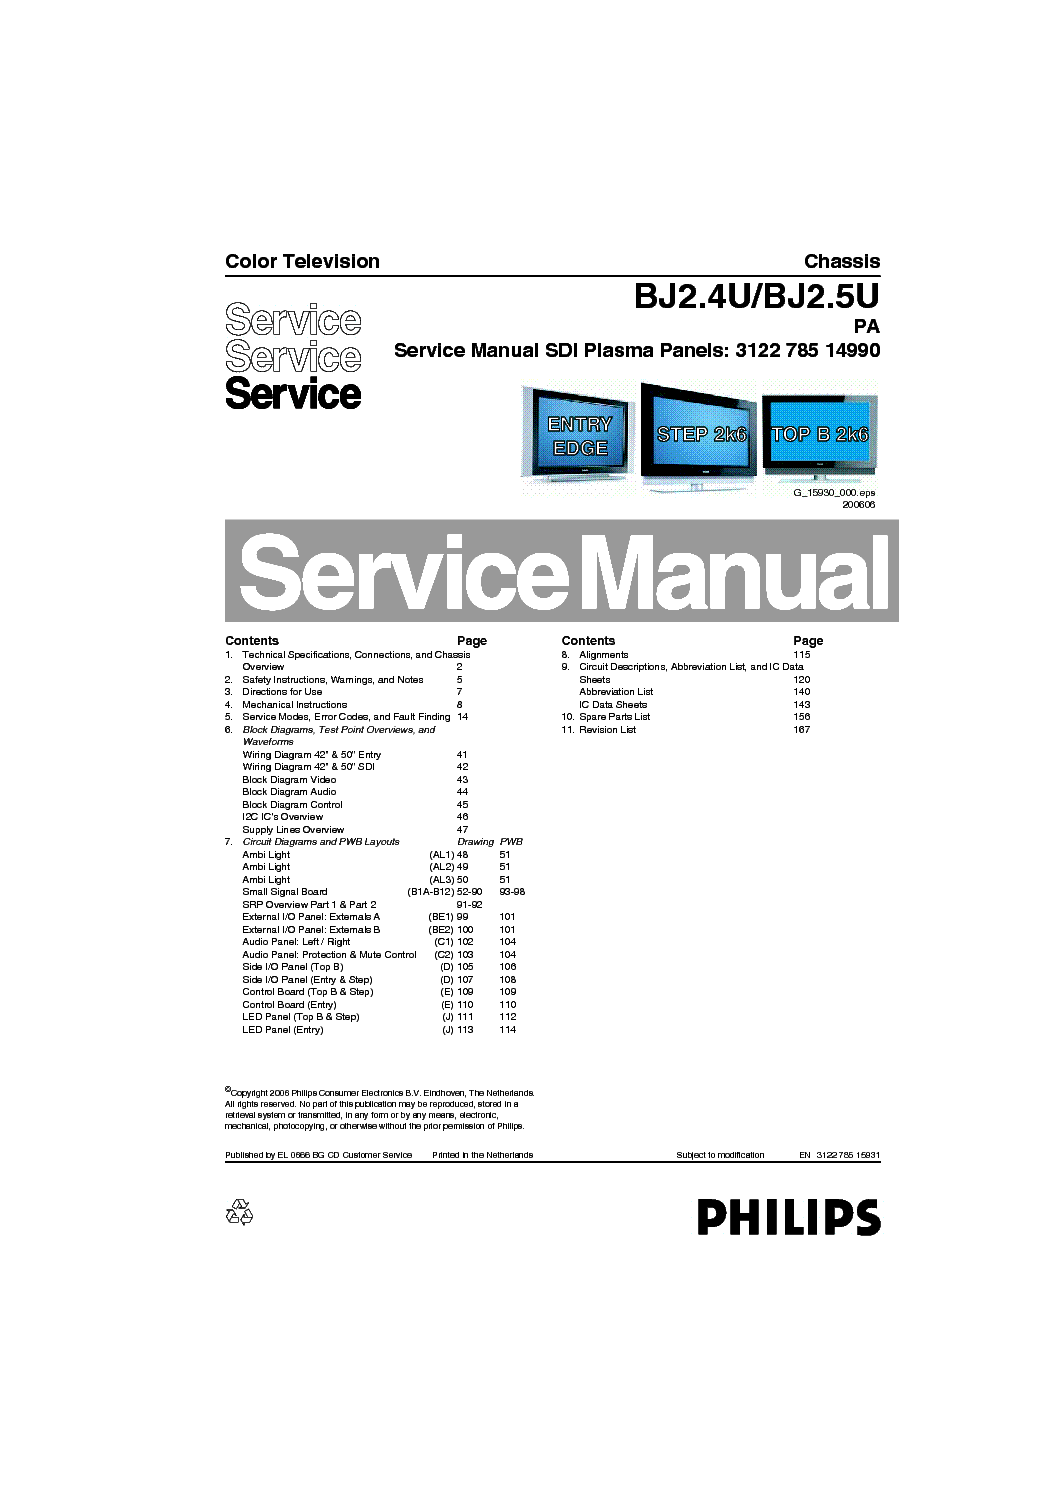 PHILIPS CHASSIS BJ2.4U BJ2.5U-PA SM service manual (1st page)